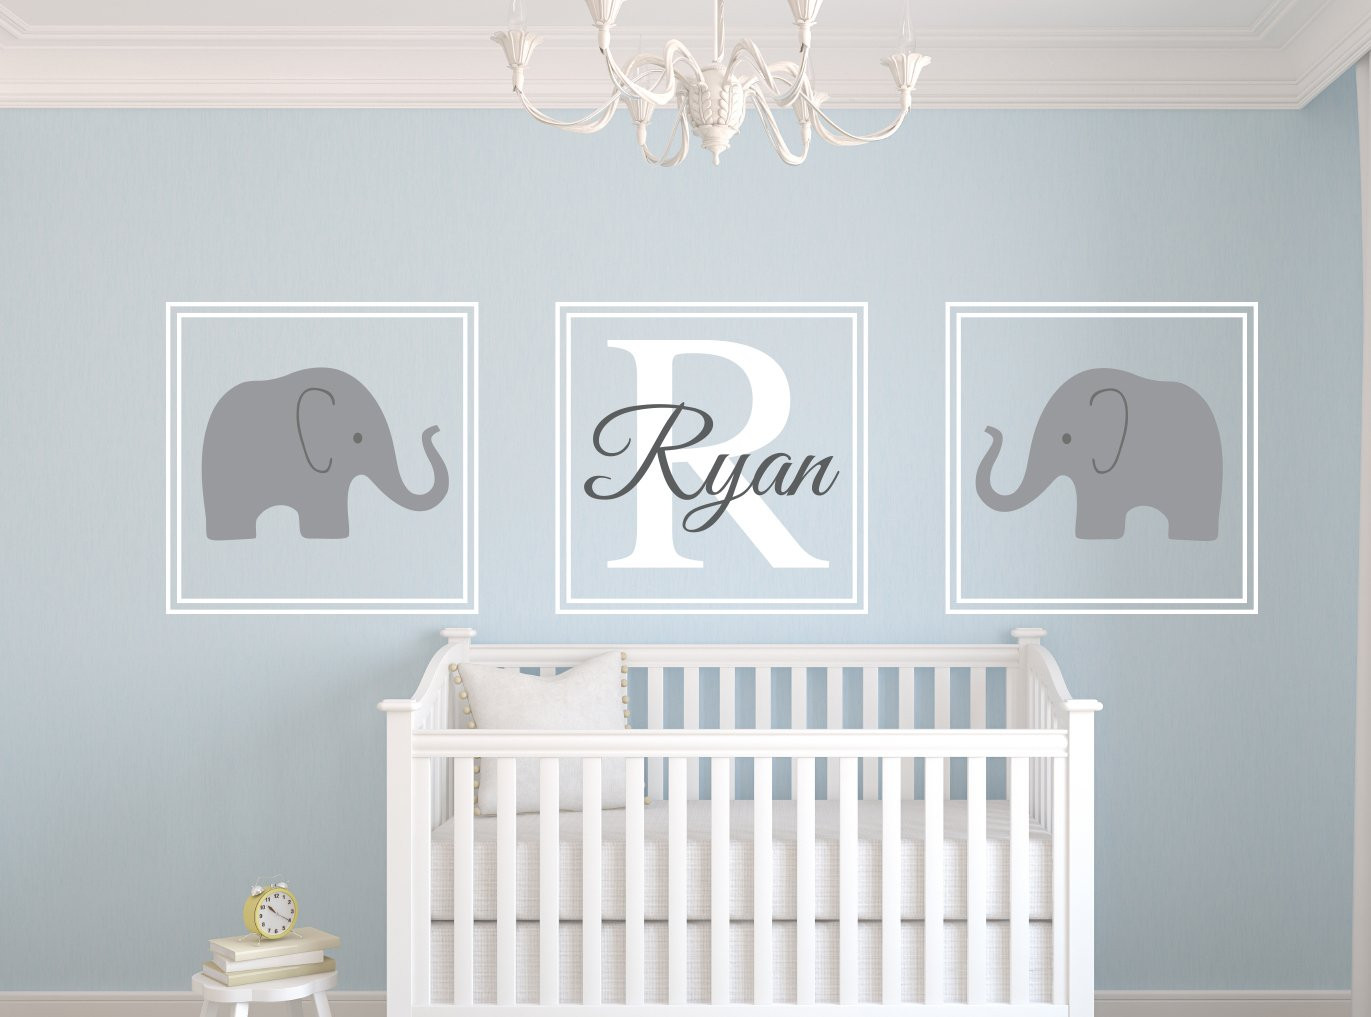 Baby Room Wall Decorations
 Gray Crib Bedding and Nursery Decor